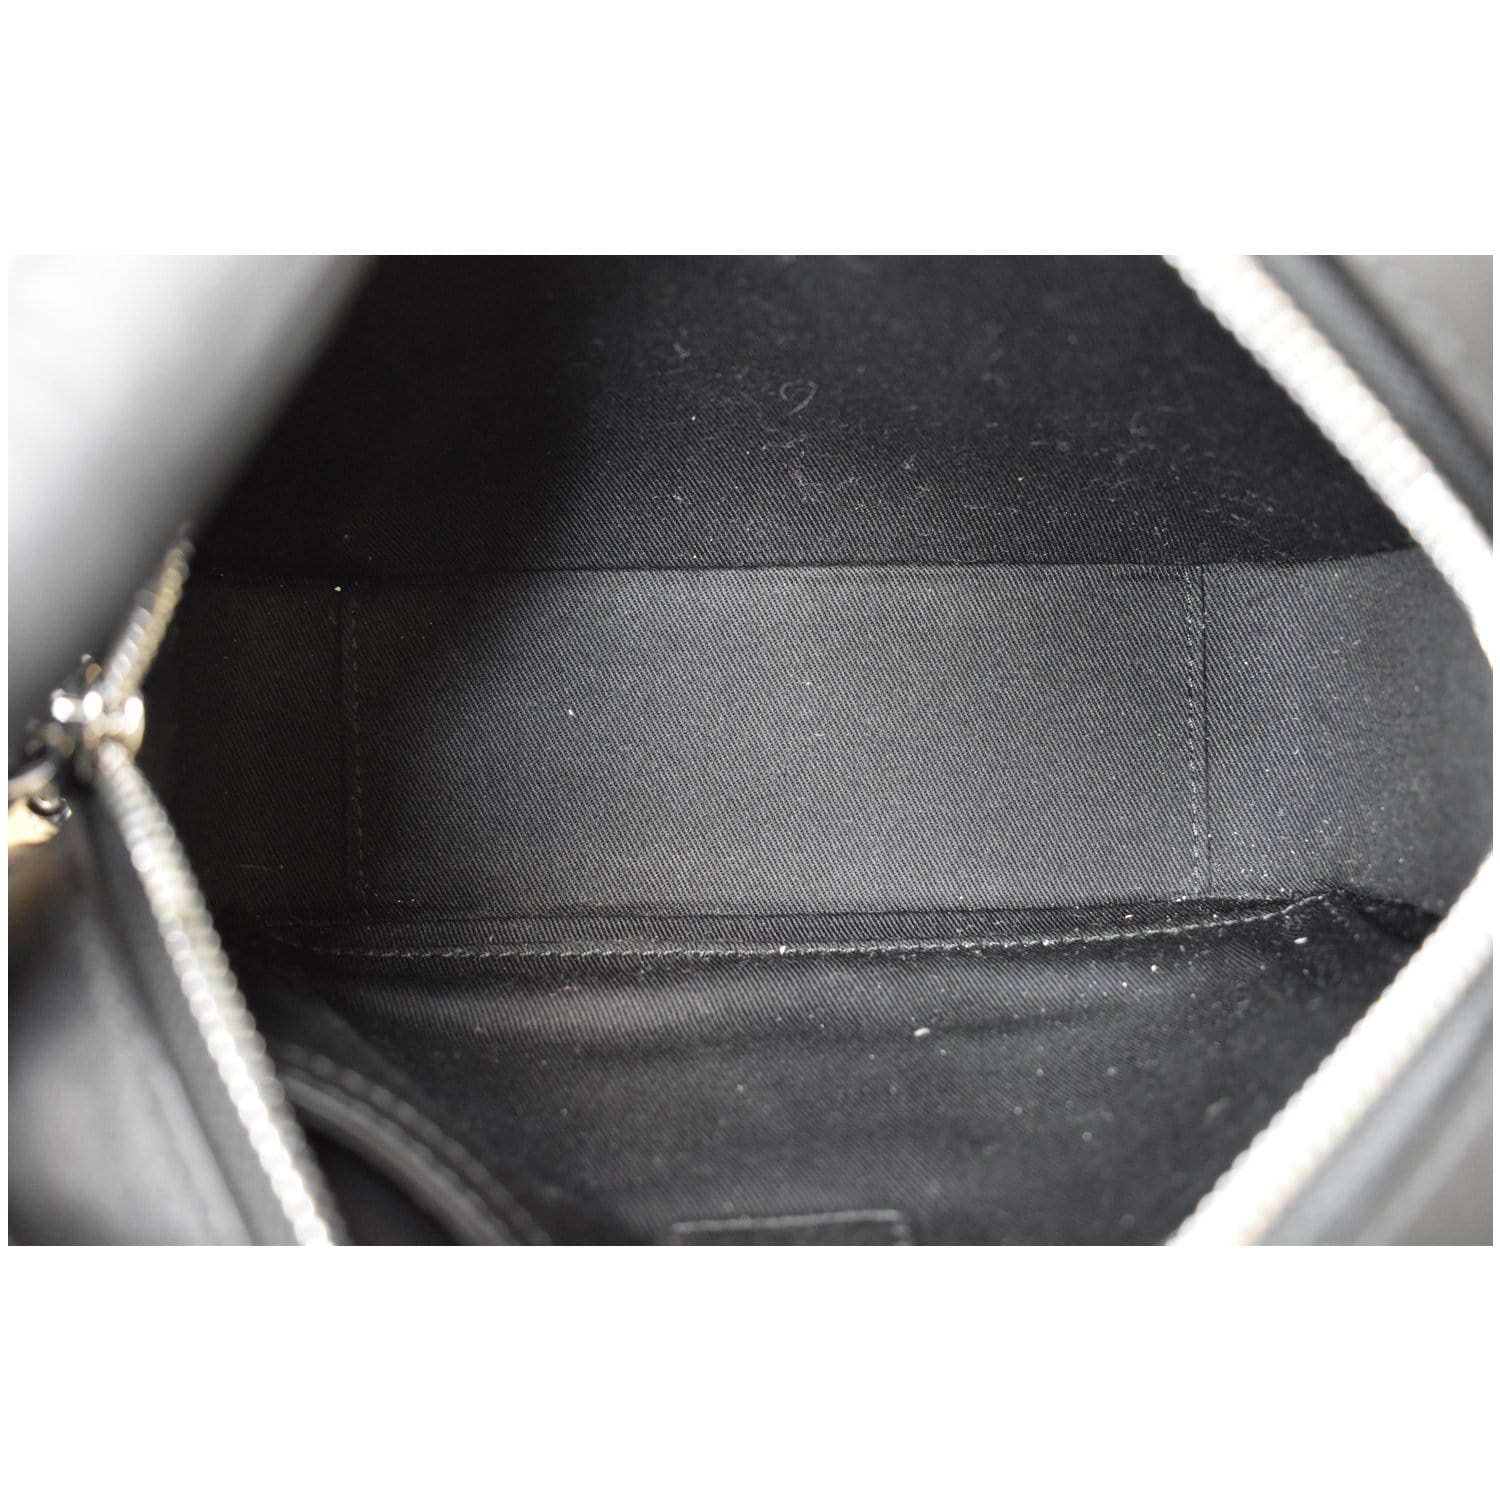 New MCM $675 Silver Black Double Zip Leather Crossbody Camera Bag Purse